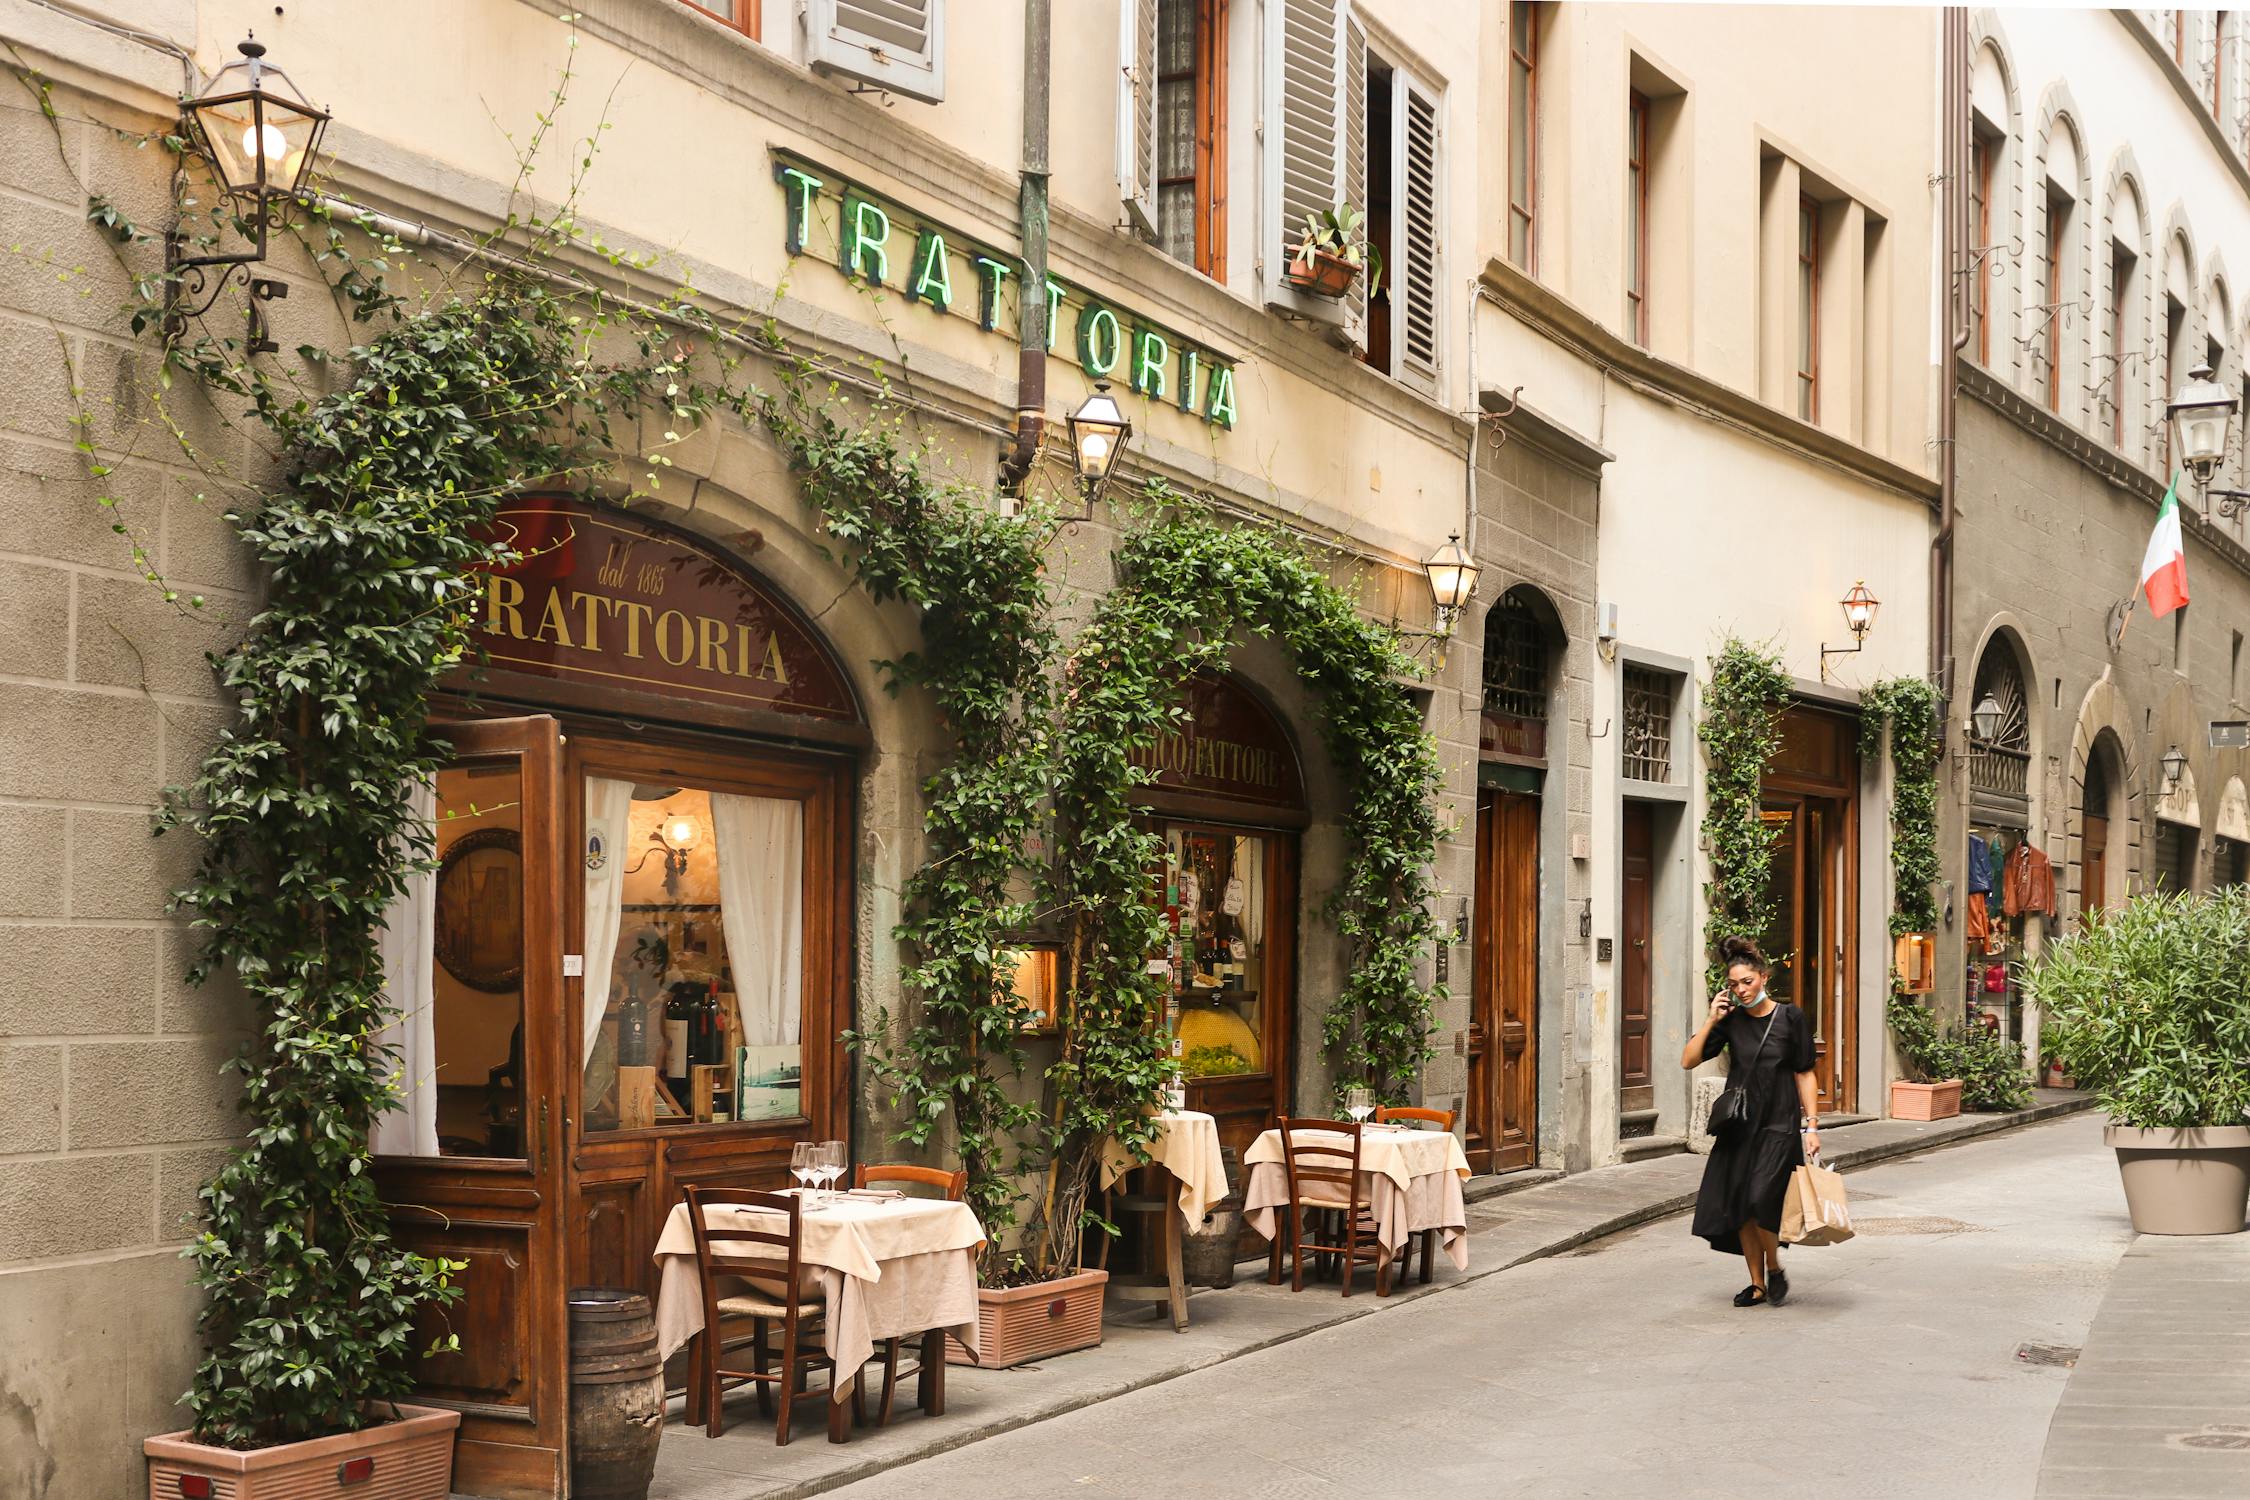 An Italian restaurant